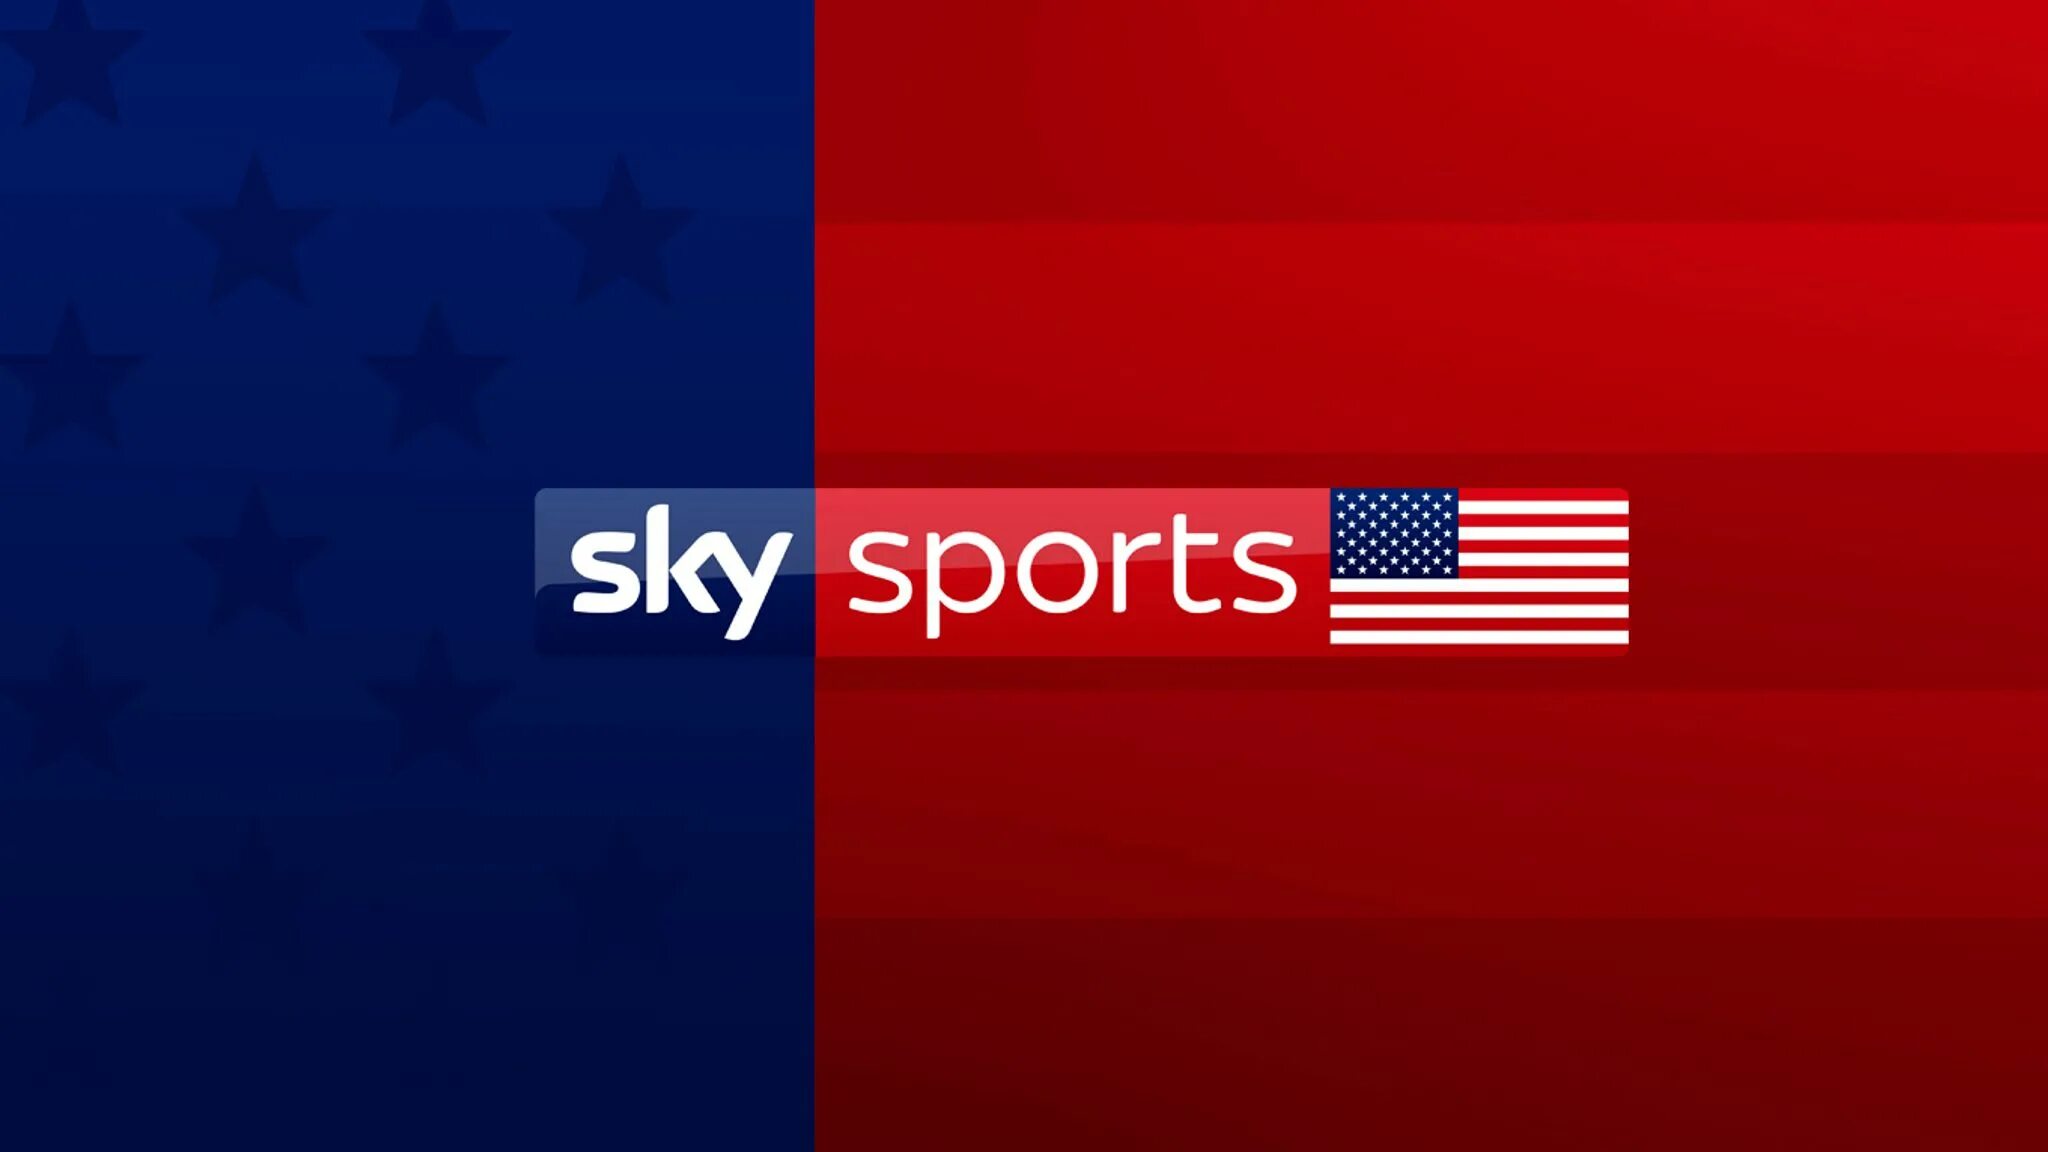 Sky Sport. Скай Спортс. Sky Sports USA. Sky Sports Football. Sky sports live stream